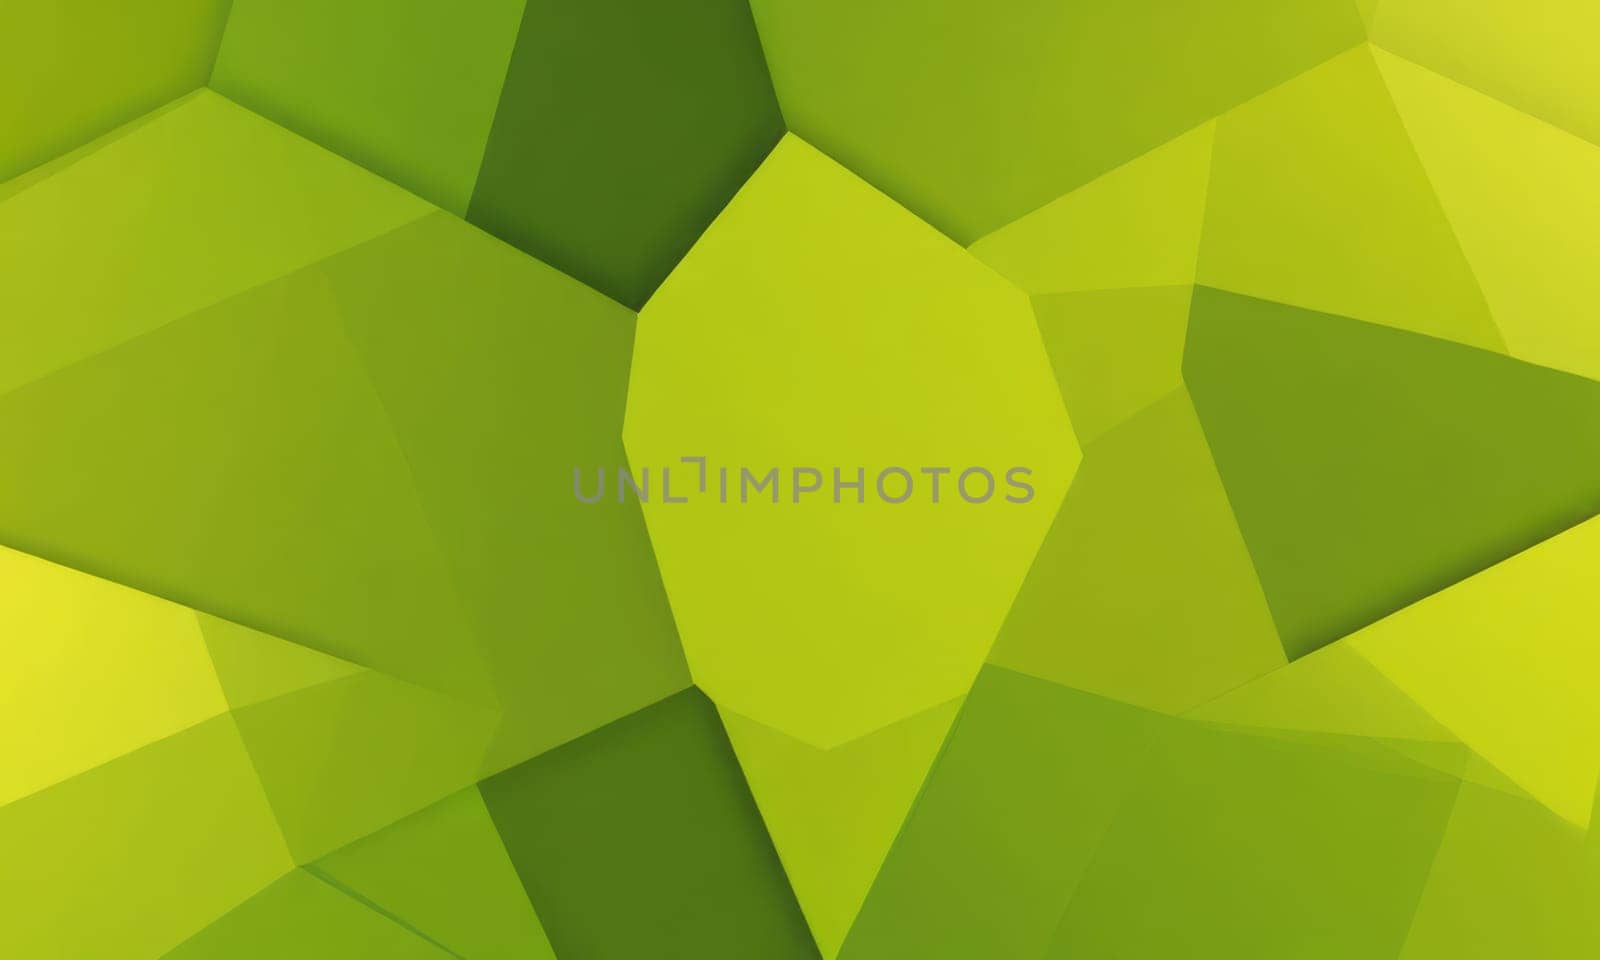 Pentagonal Shapes in Olive Lime by nkotlyar